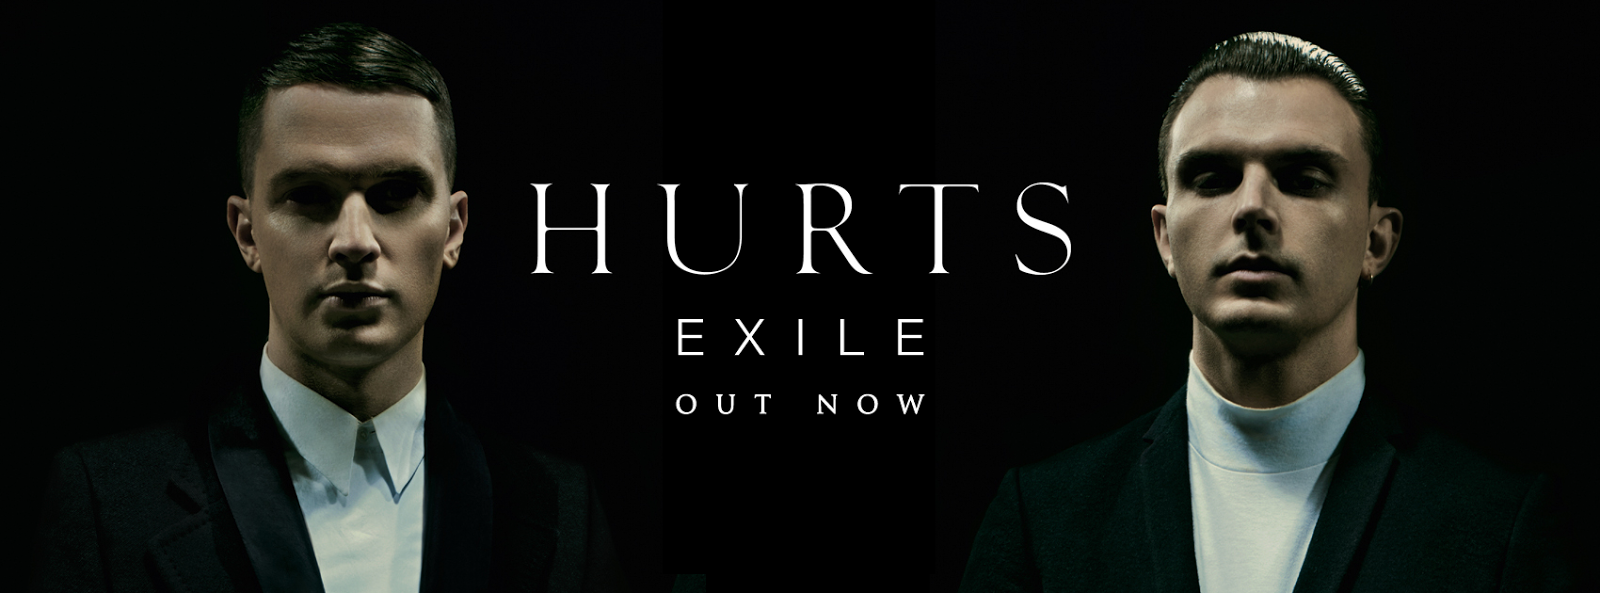 Hurts take. Hurts группа 2021. Hurts 2013 Exile. Hurts обложки. Hurts обложки альбомов.